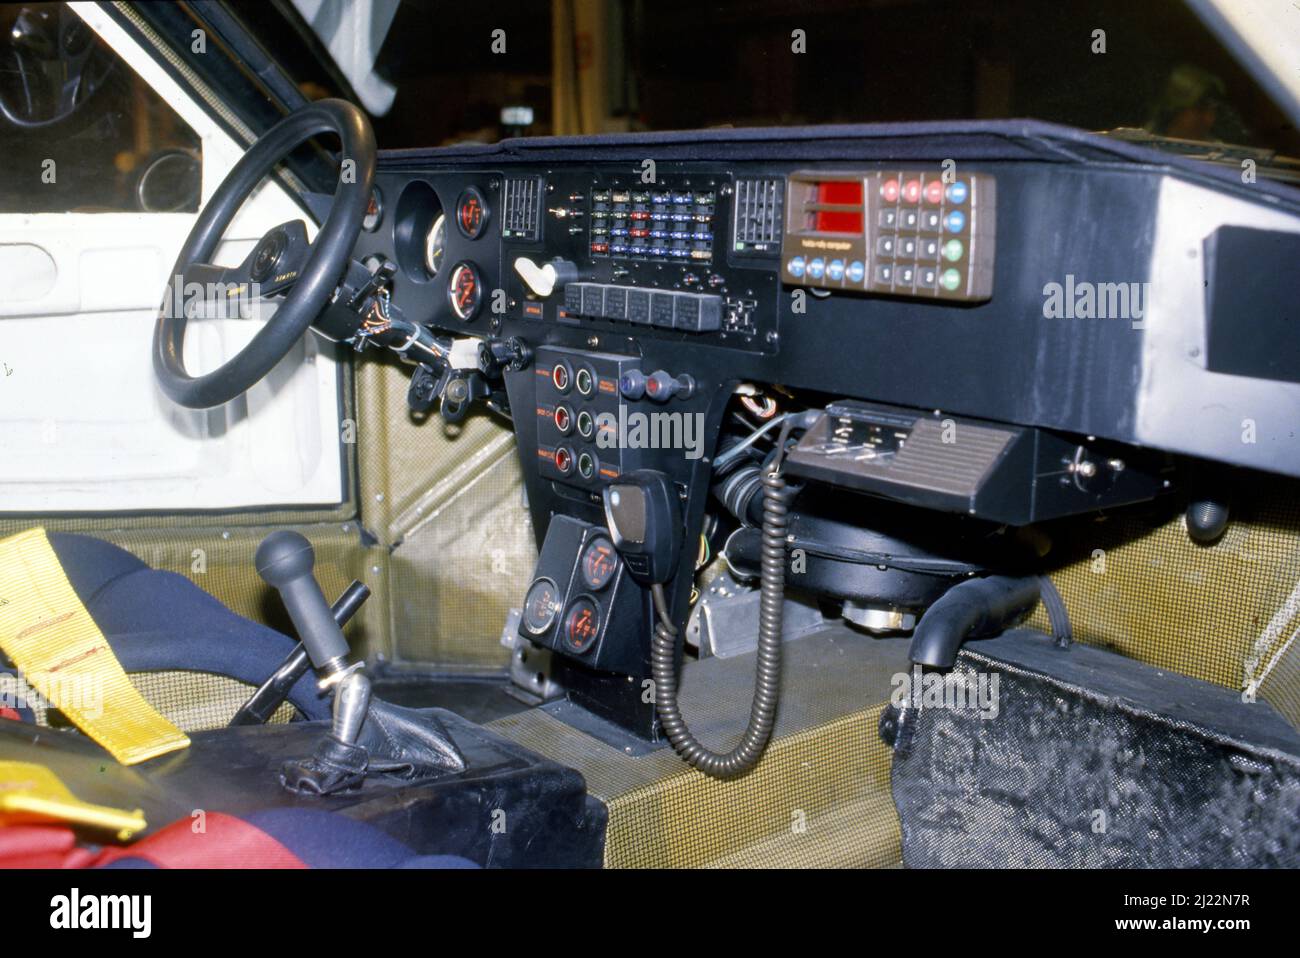 Lancia Delta S4 cockpit Stock Photo - Alamy